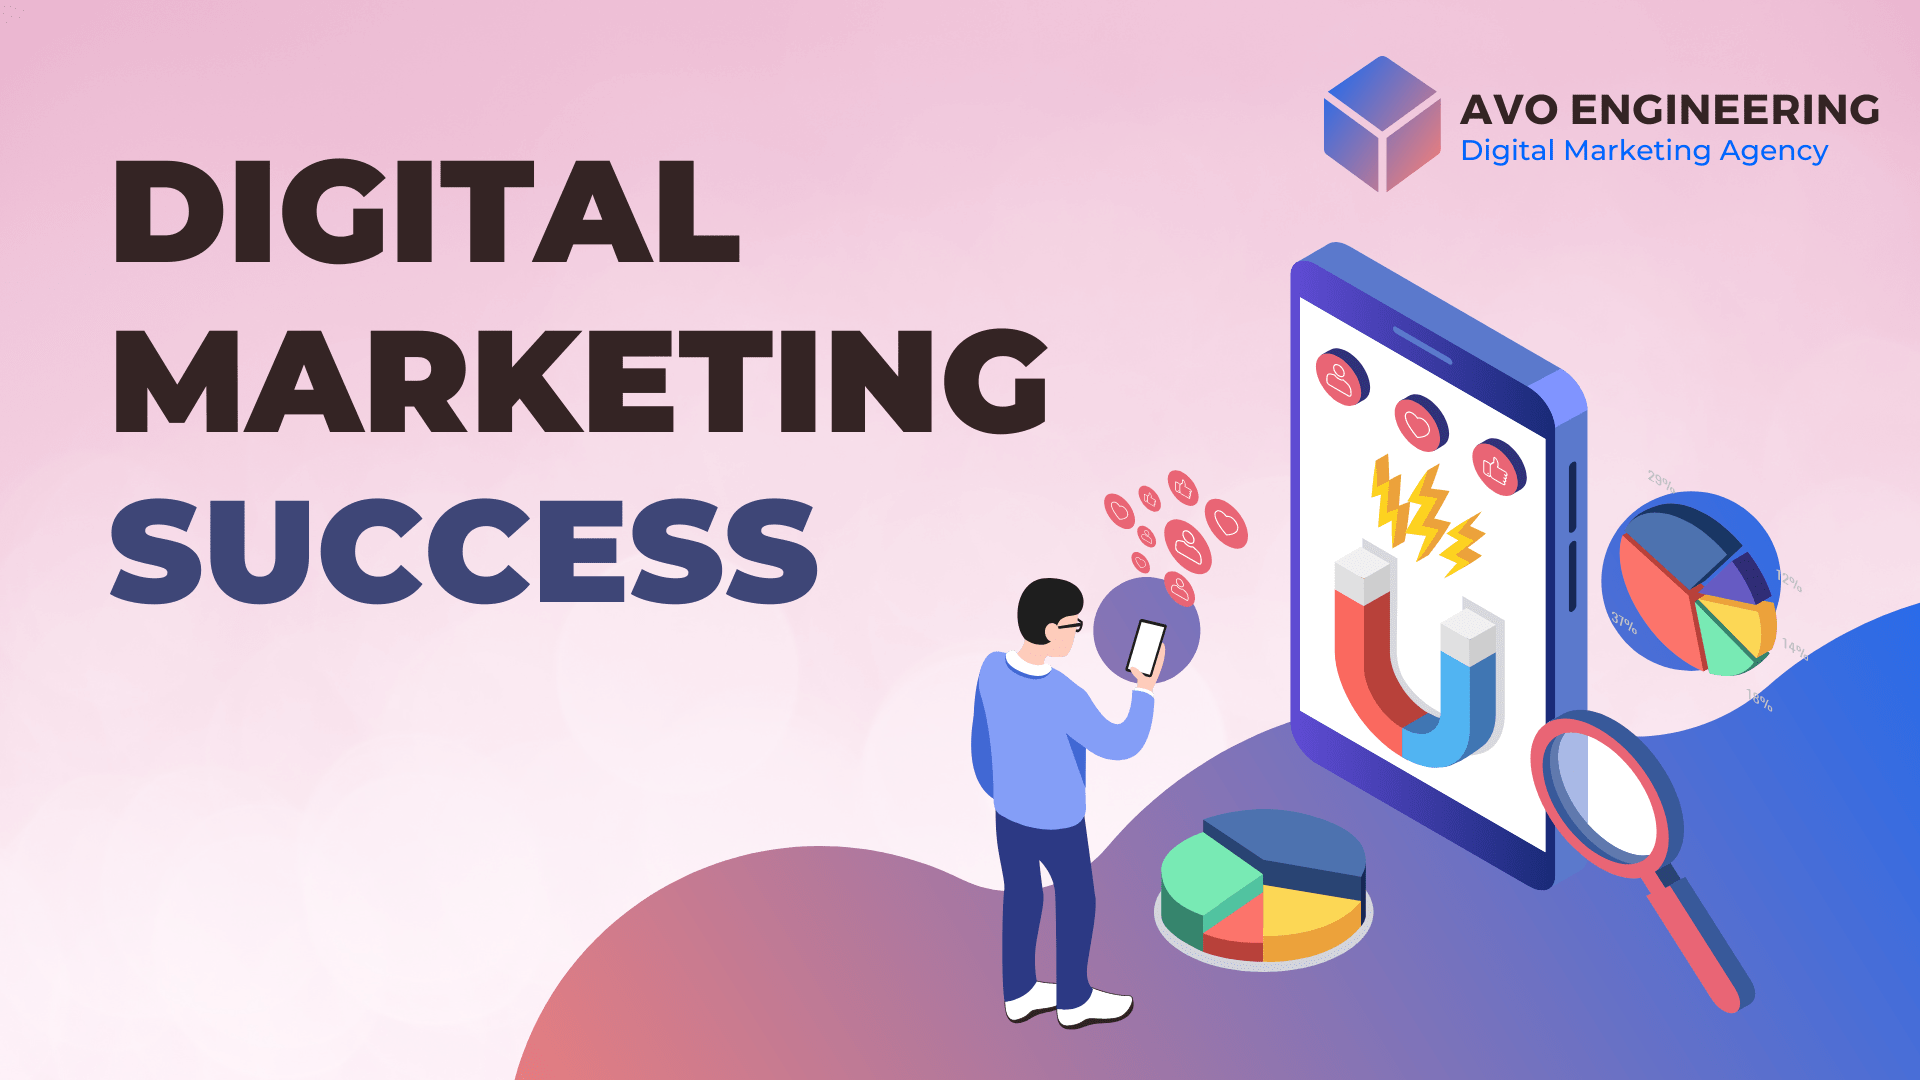 Analyzing Your Digital Marketing Success